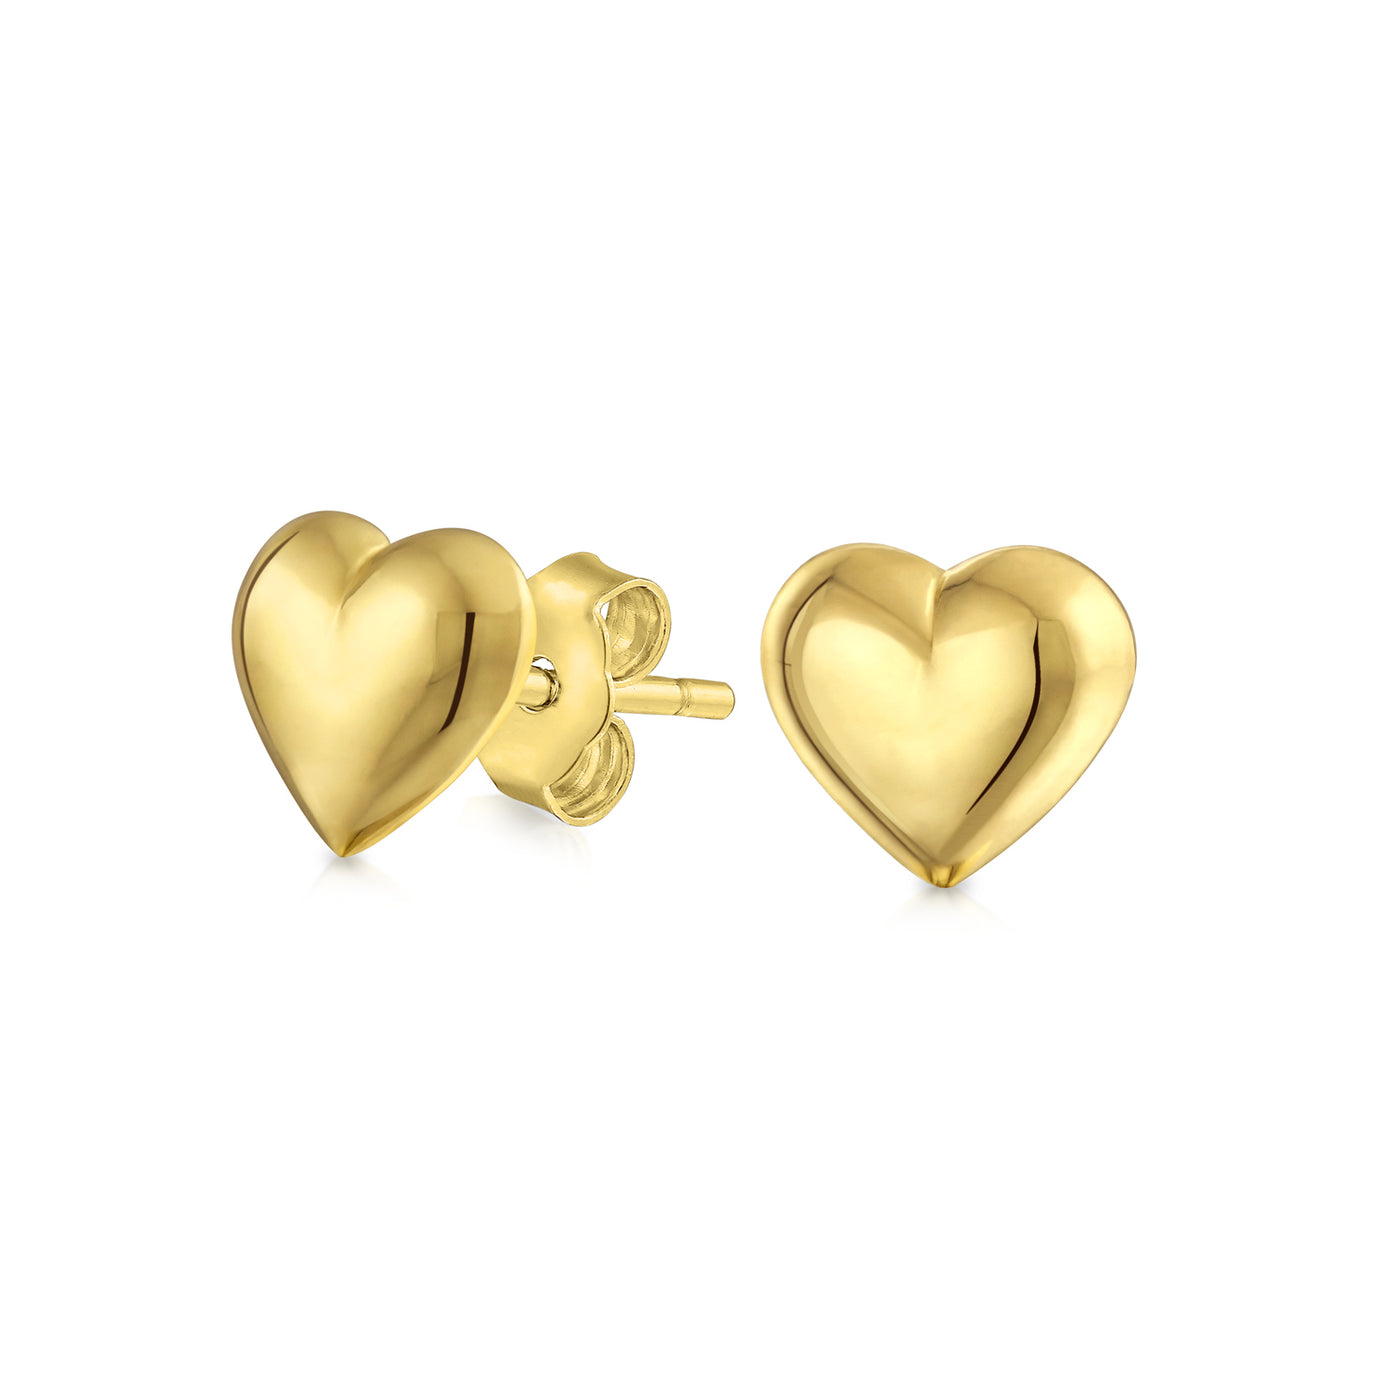 Minimalist Real 14K Yellow Gold Puff Heart Stud Earrings For Women 5MM